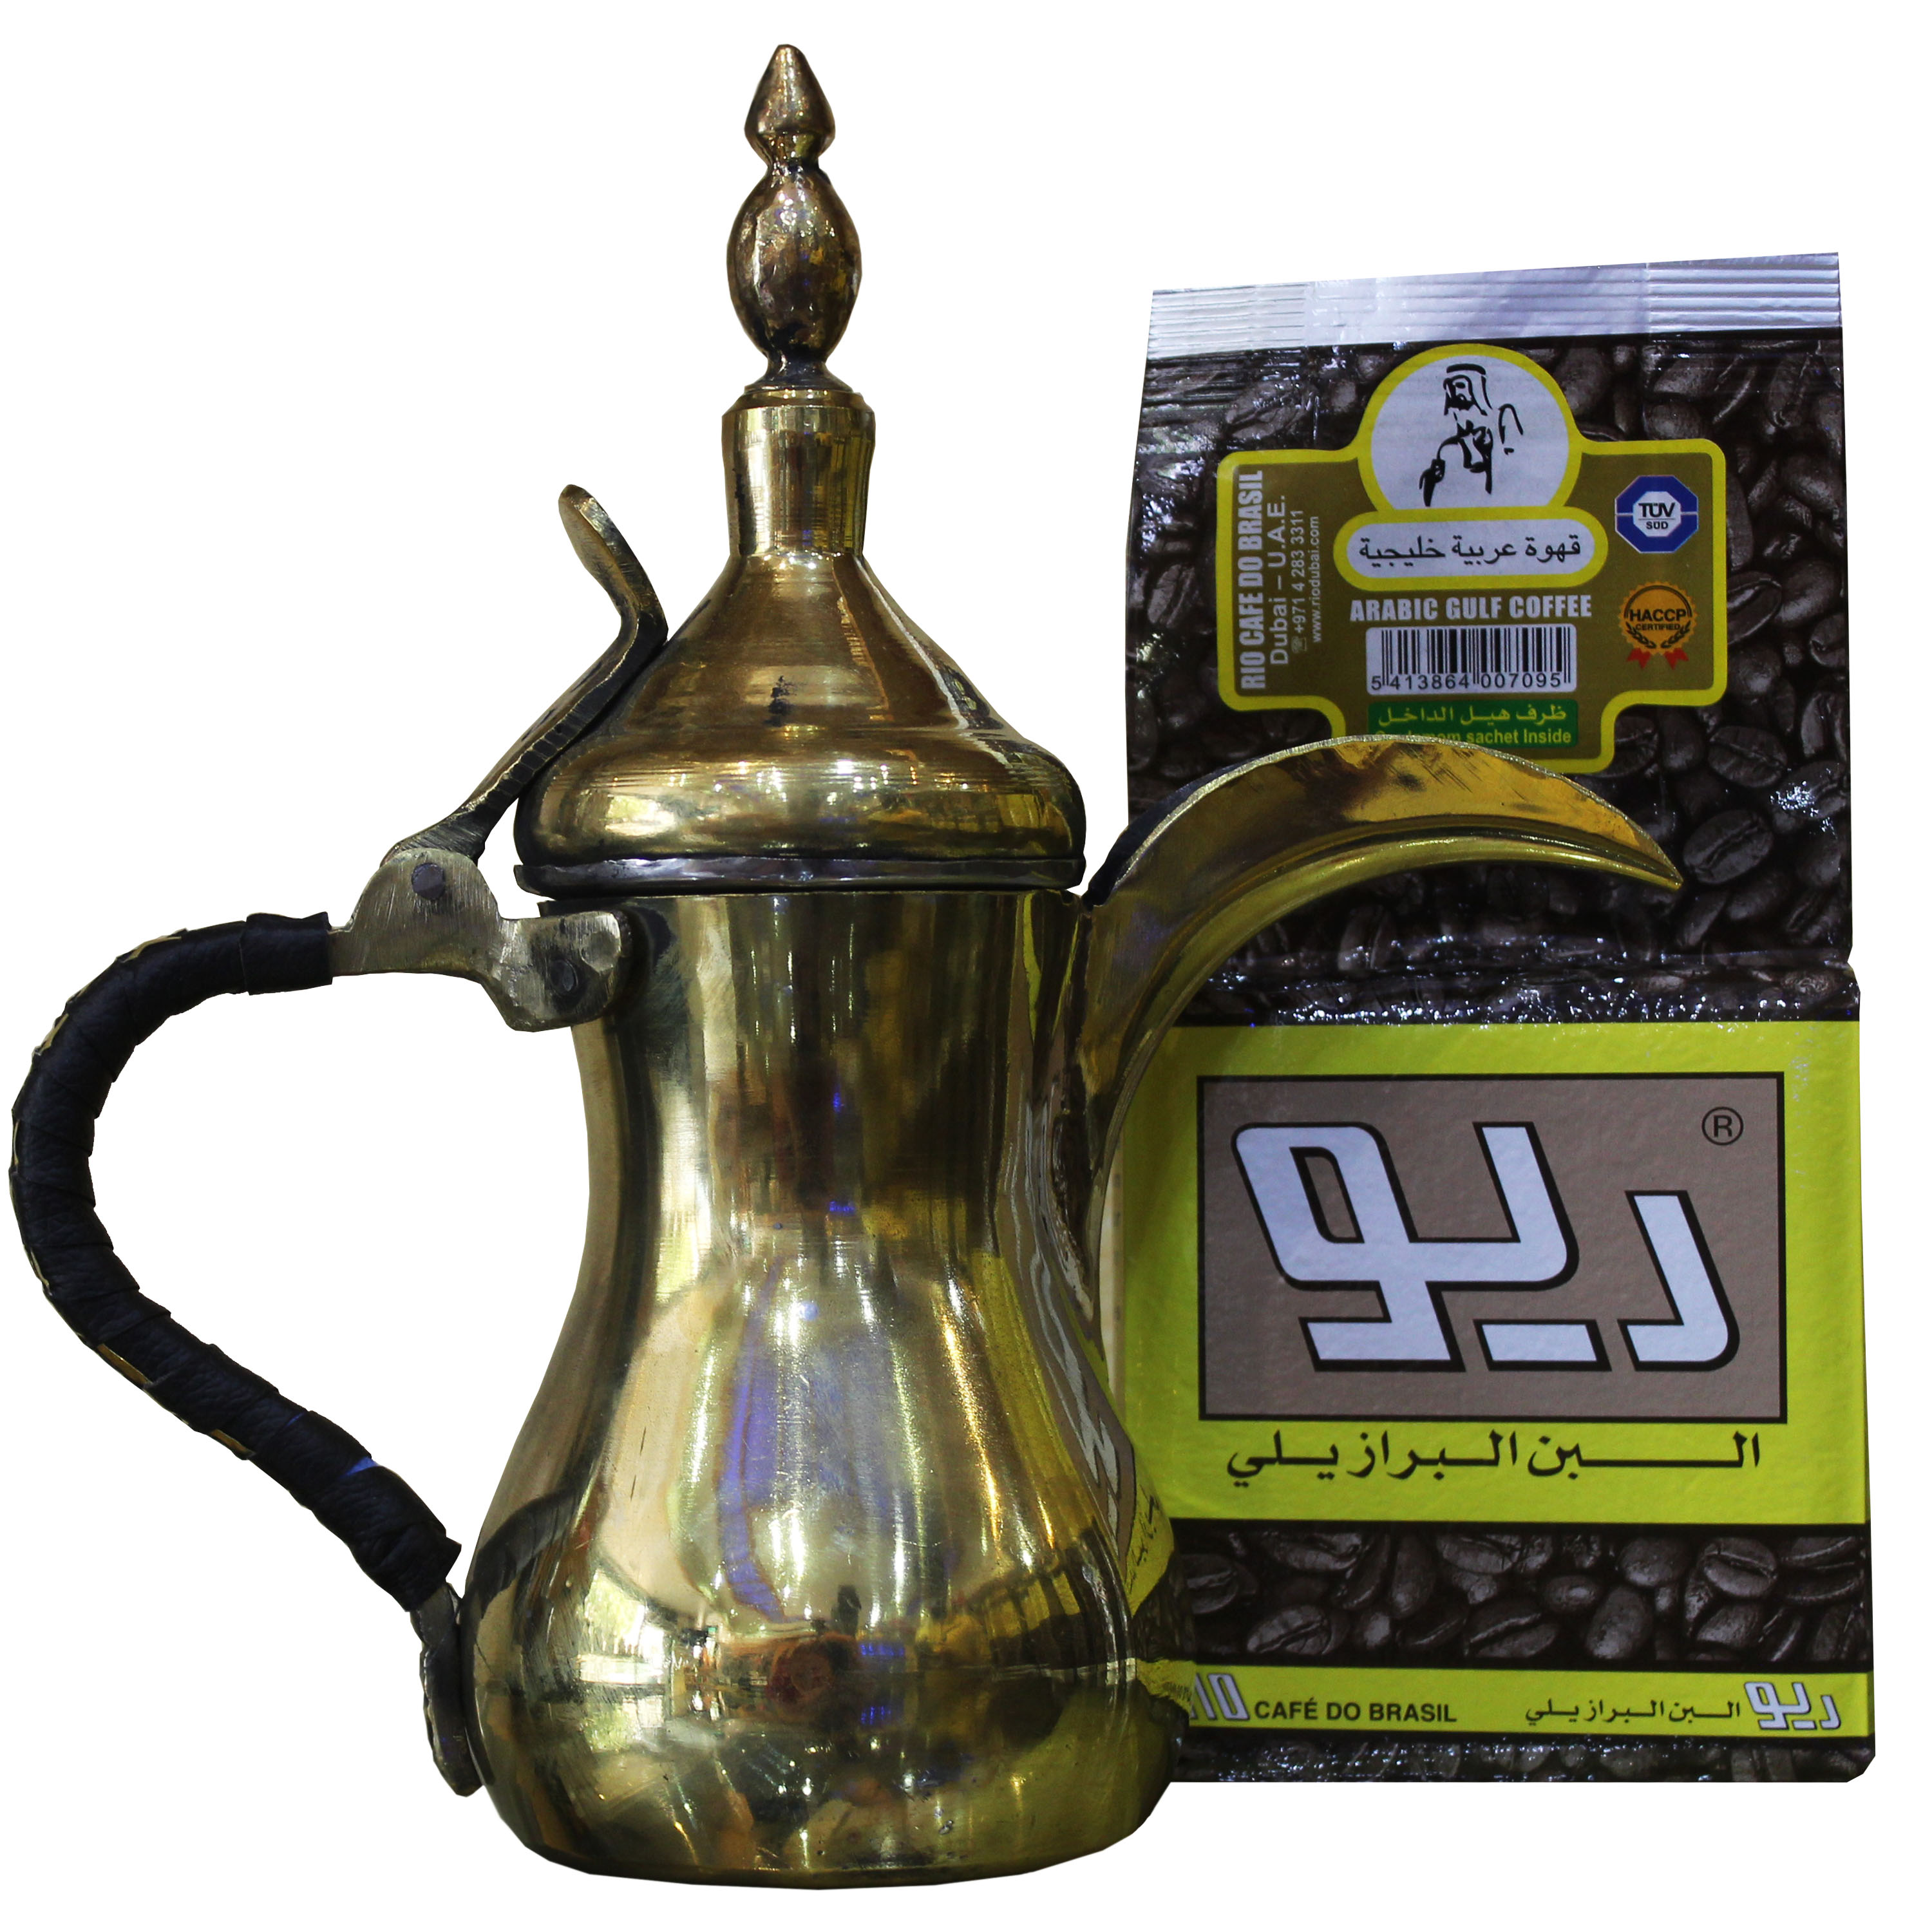 Arabic Gulf Coffee with Pot